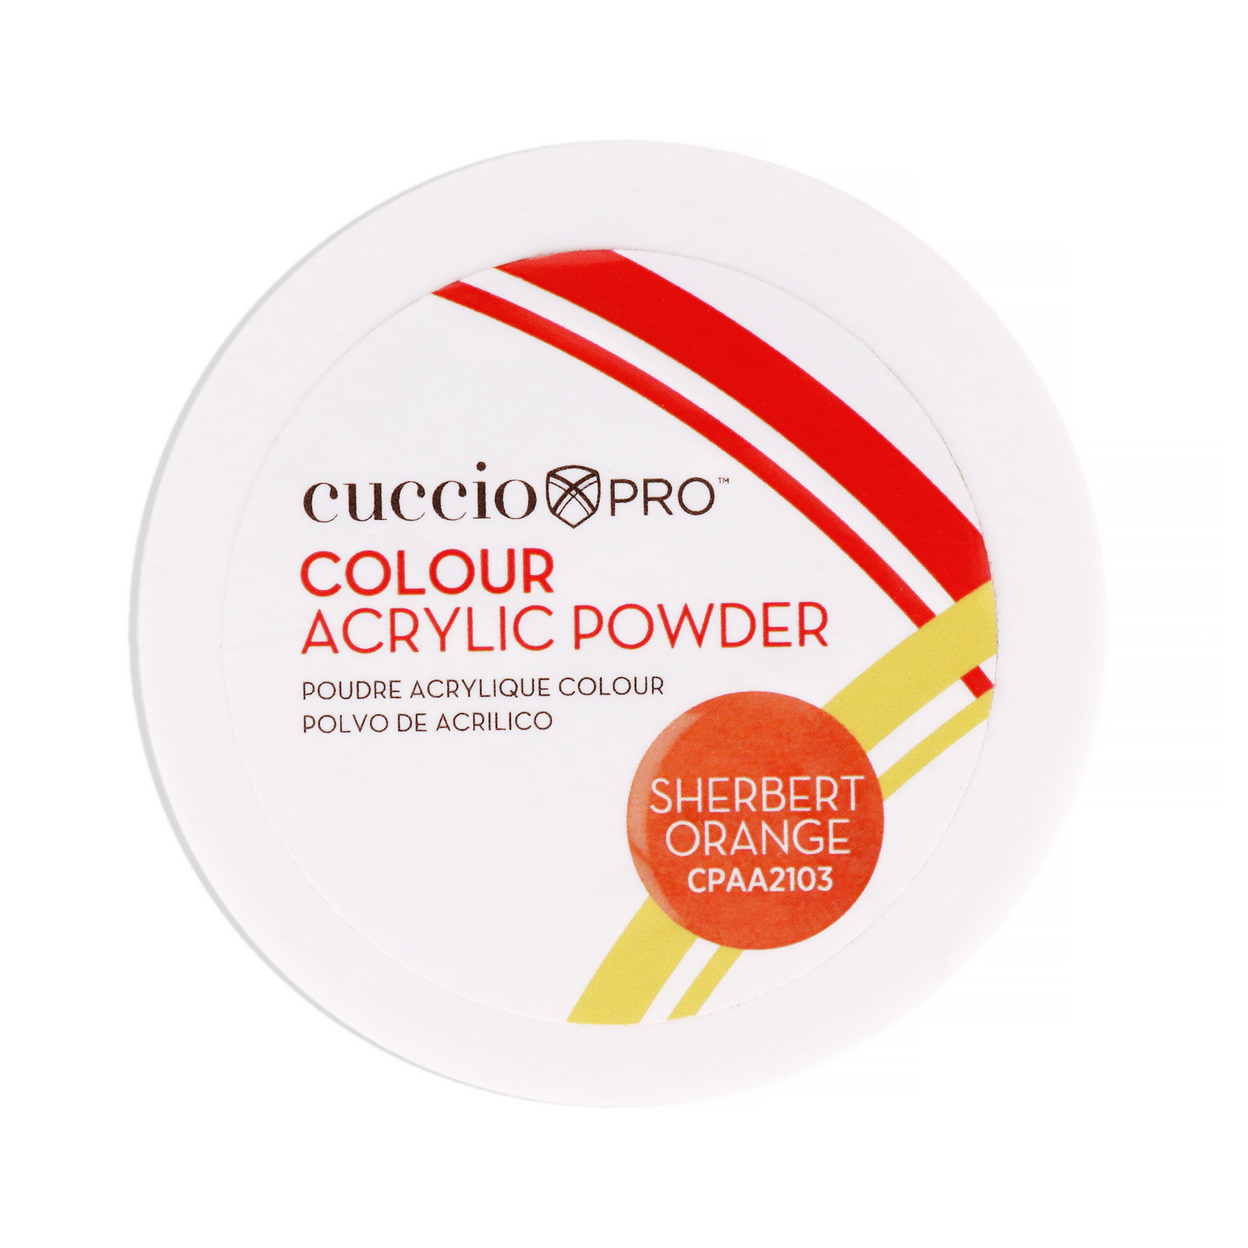 Cuccio PRO Colour Acrylic Powder - Sherbert Orange 1.6 Oz